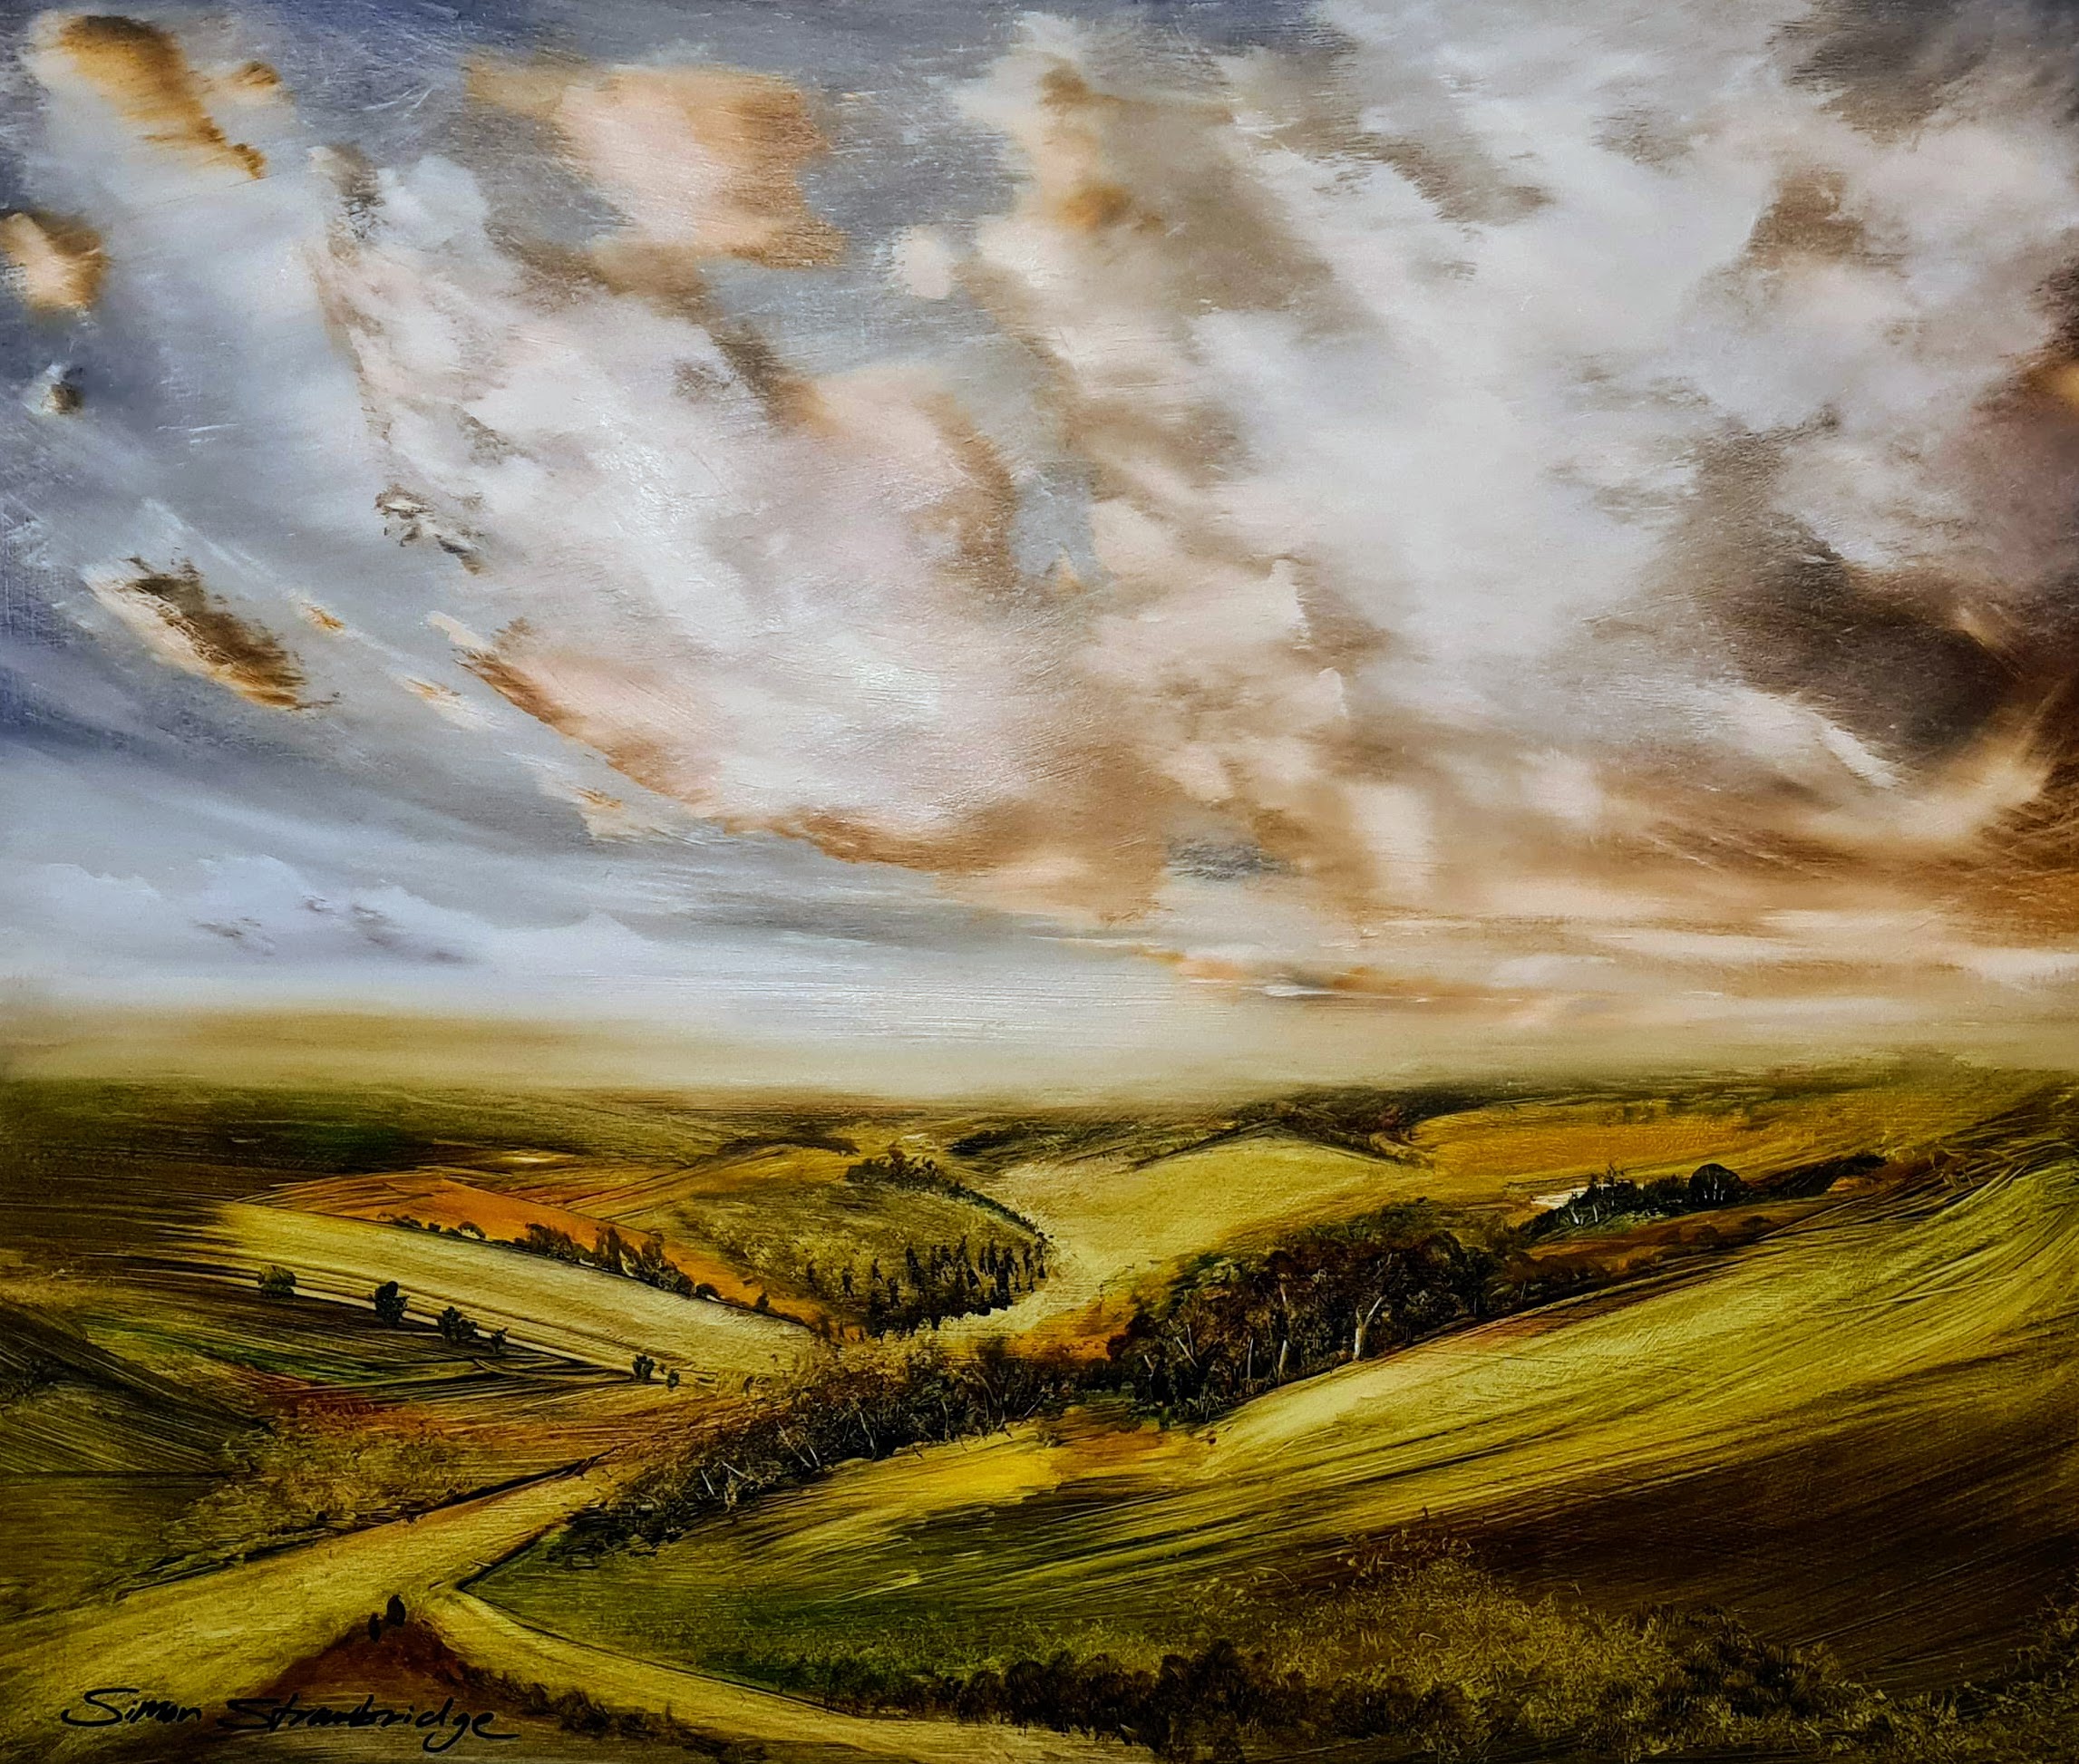 Harvest fields and Big Sky - Oil Painting by Simon Strawbridge